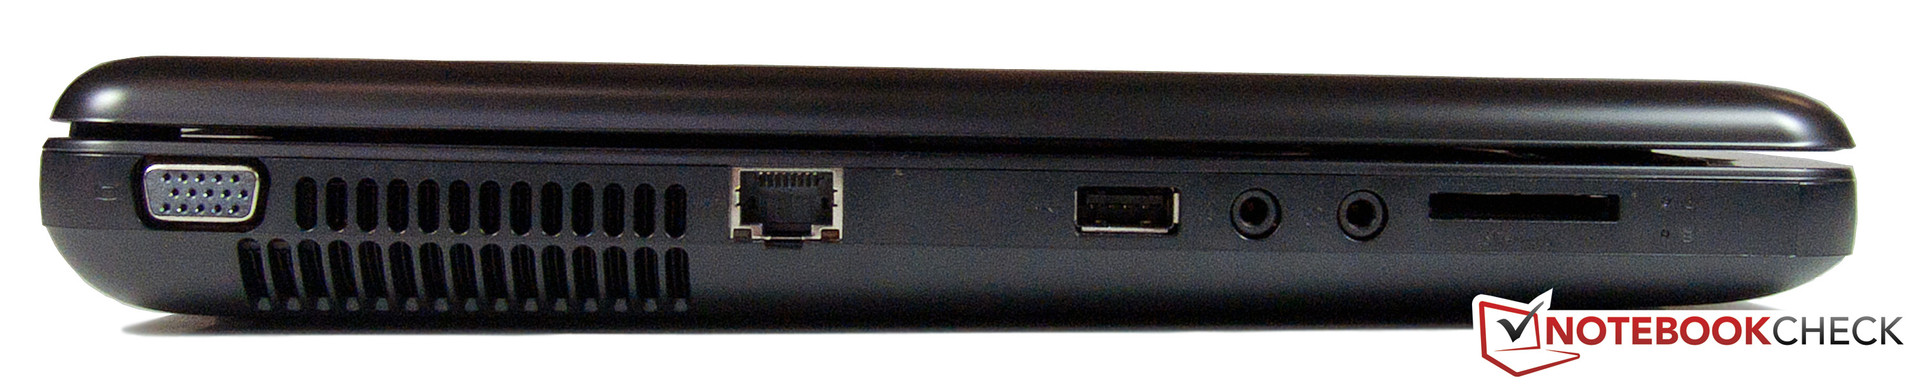 Compaq presario v6000 network controller driver